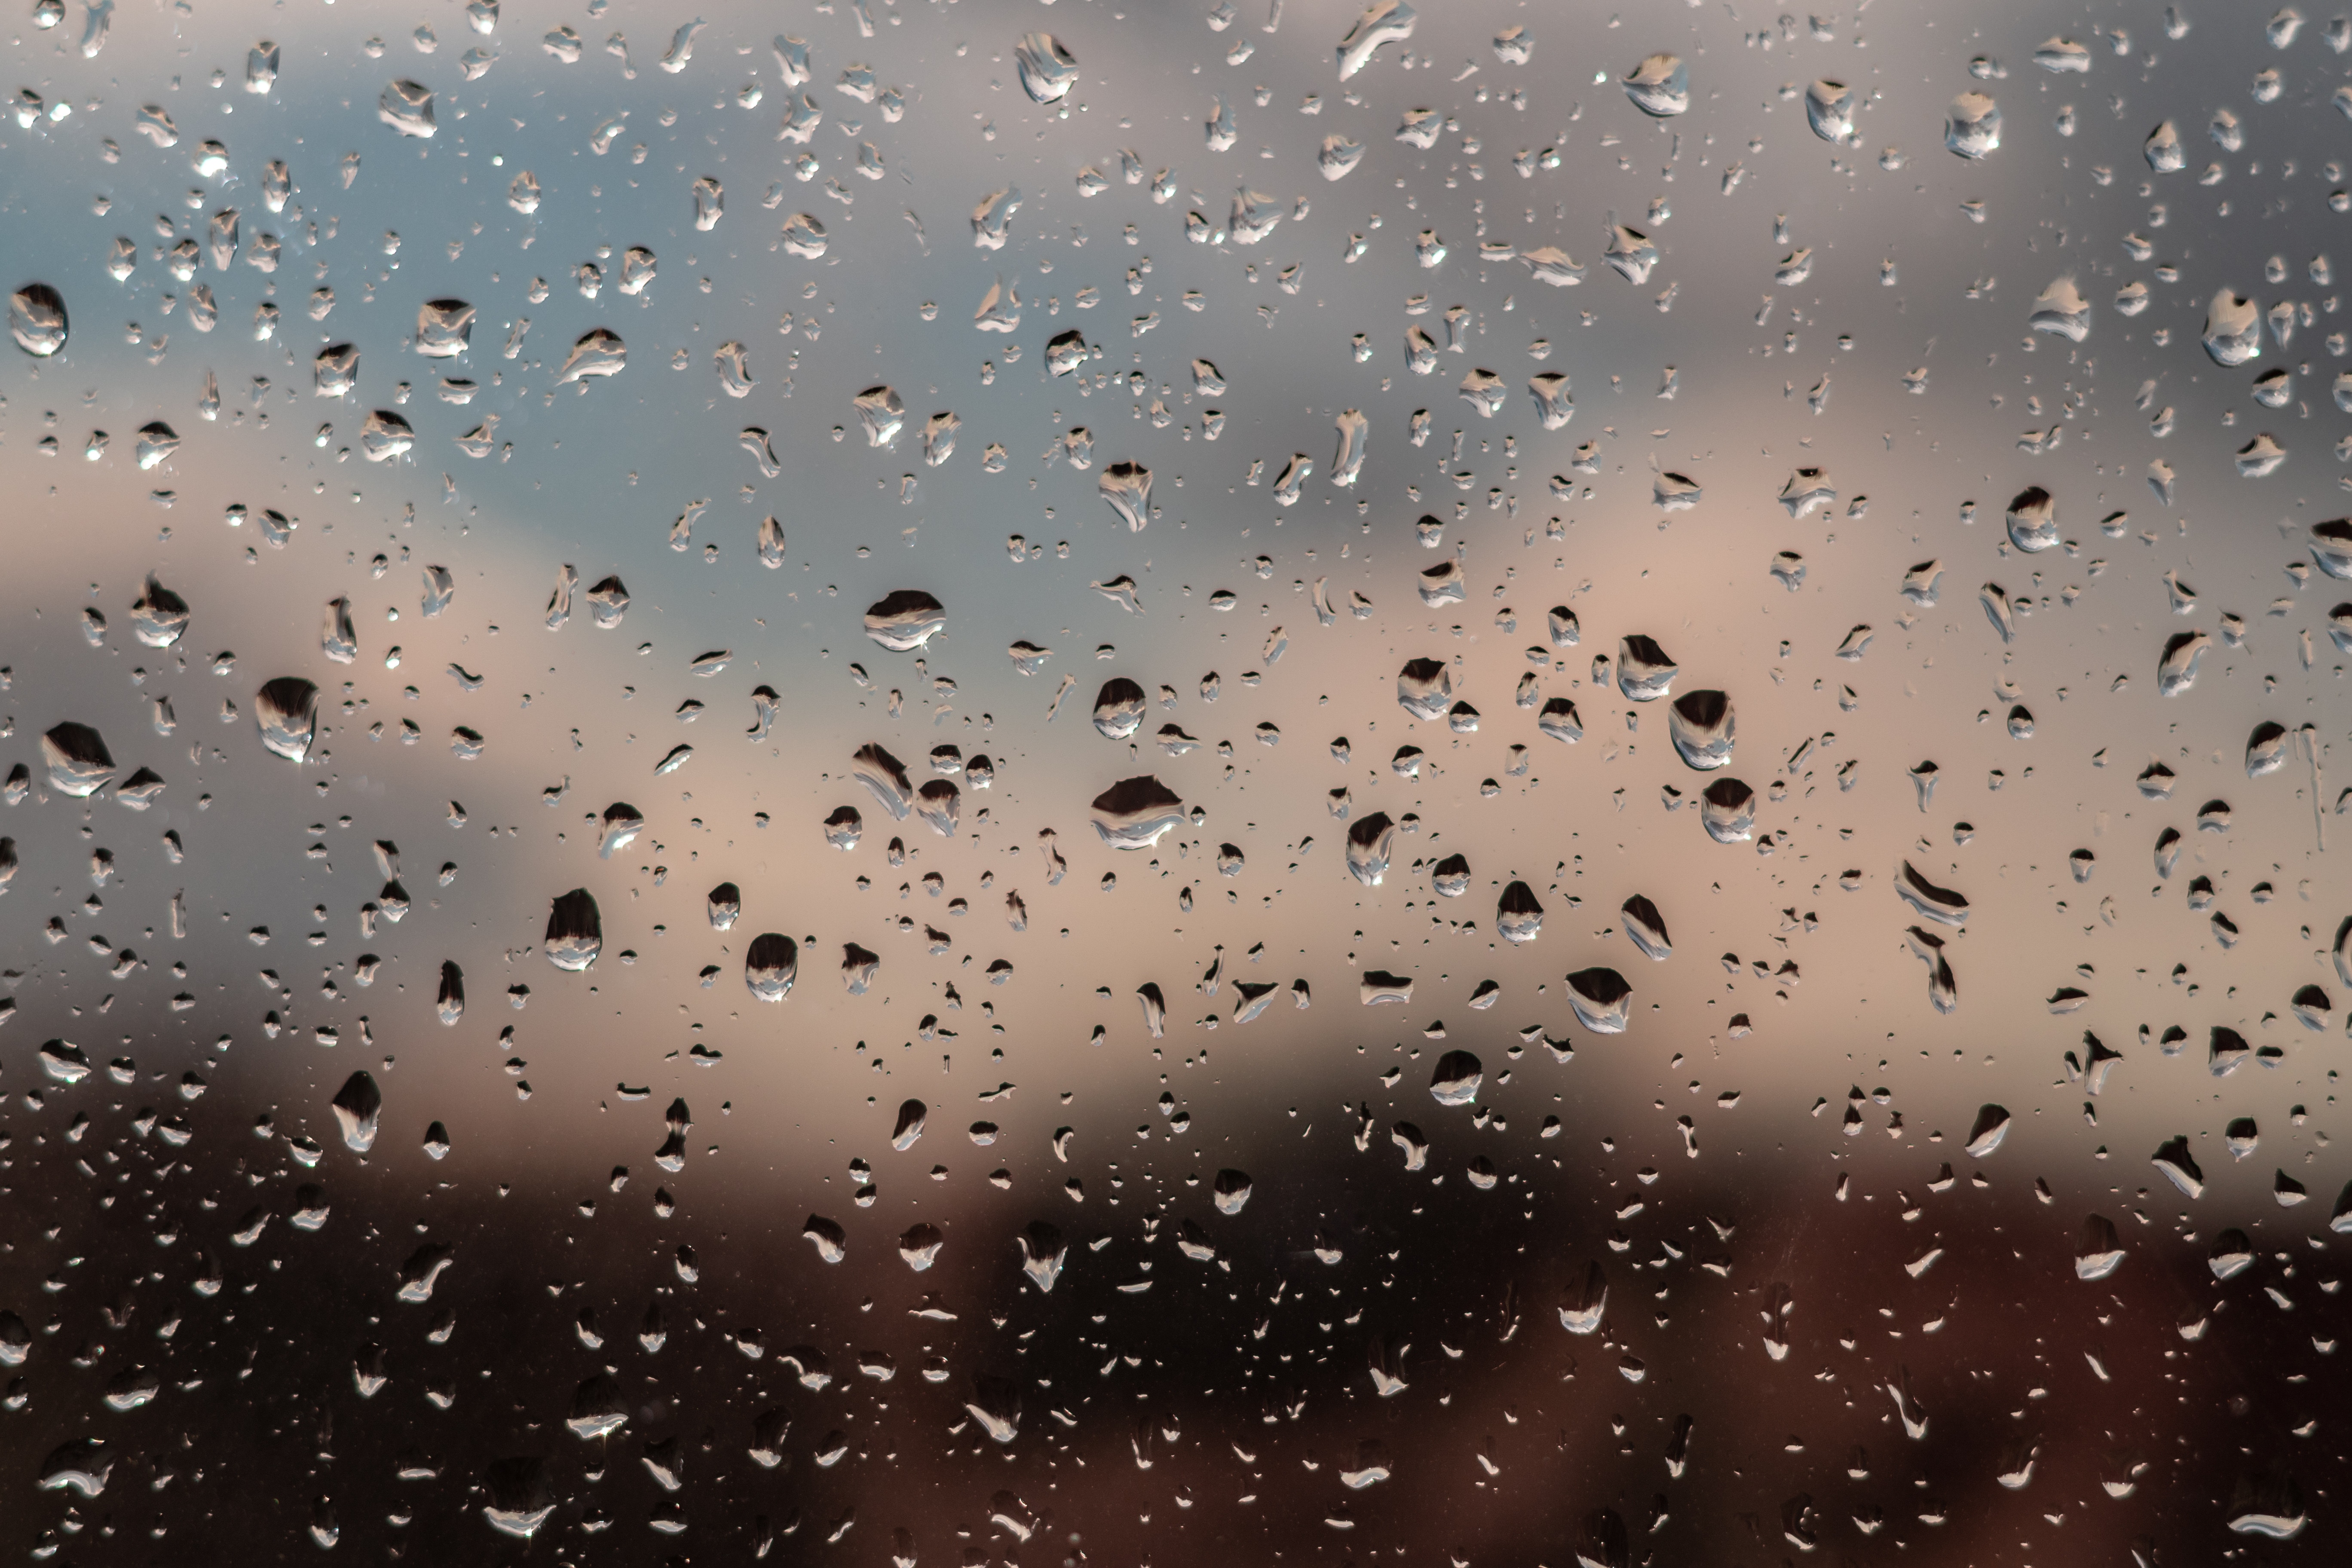 Popular Rain Image for Phone